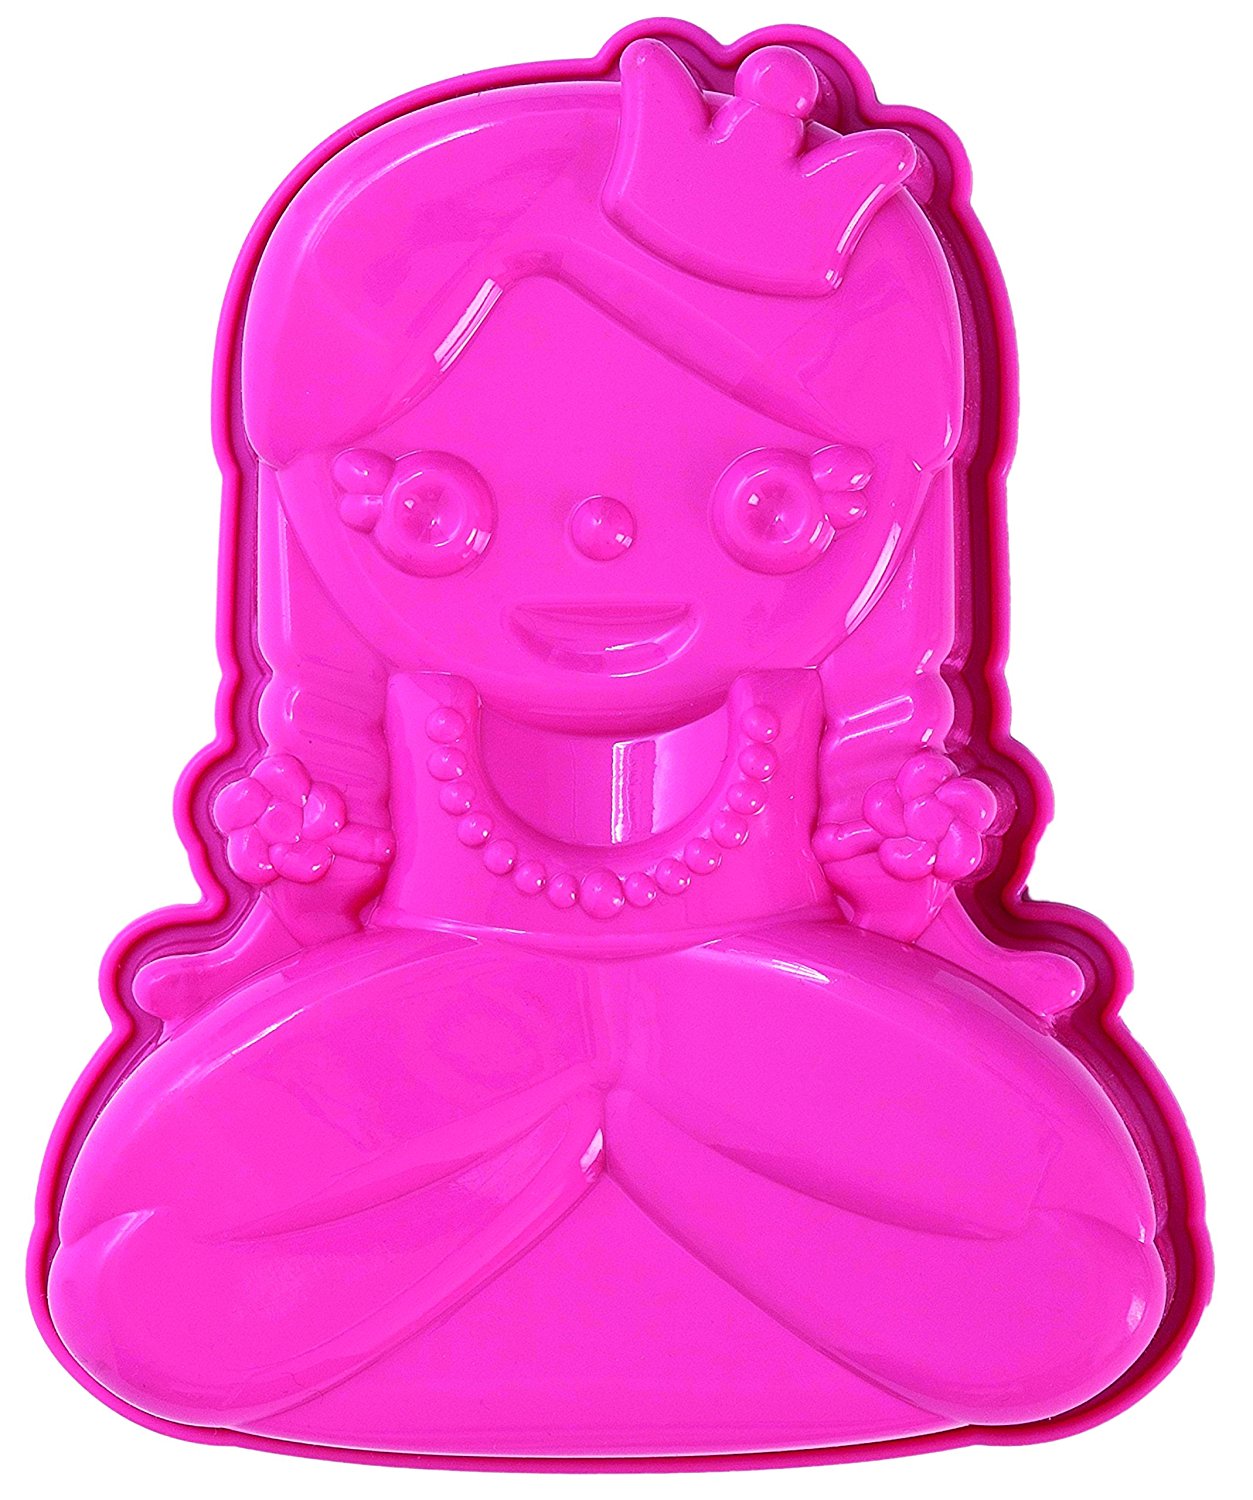 Pavoni Frt172 Platinum Silicone Miss Princy Princess Mini Cake Mould Pink Free Image Download 1077